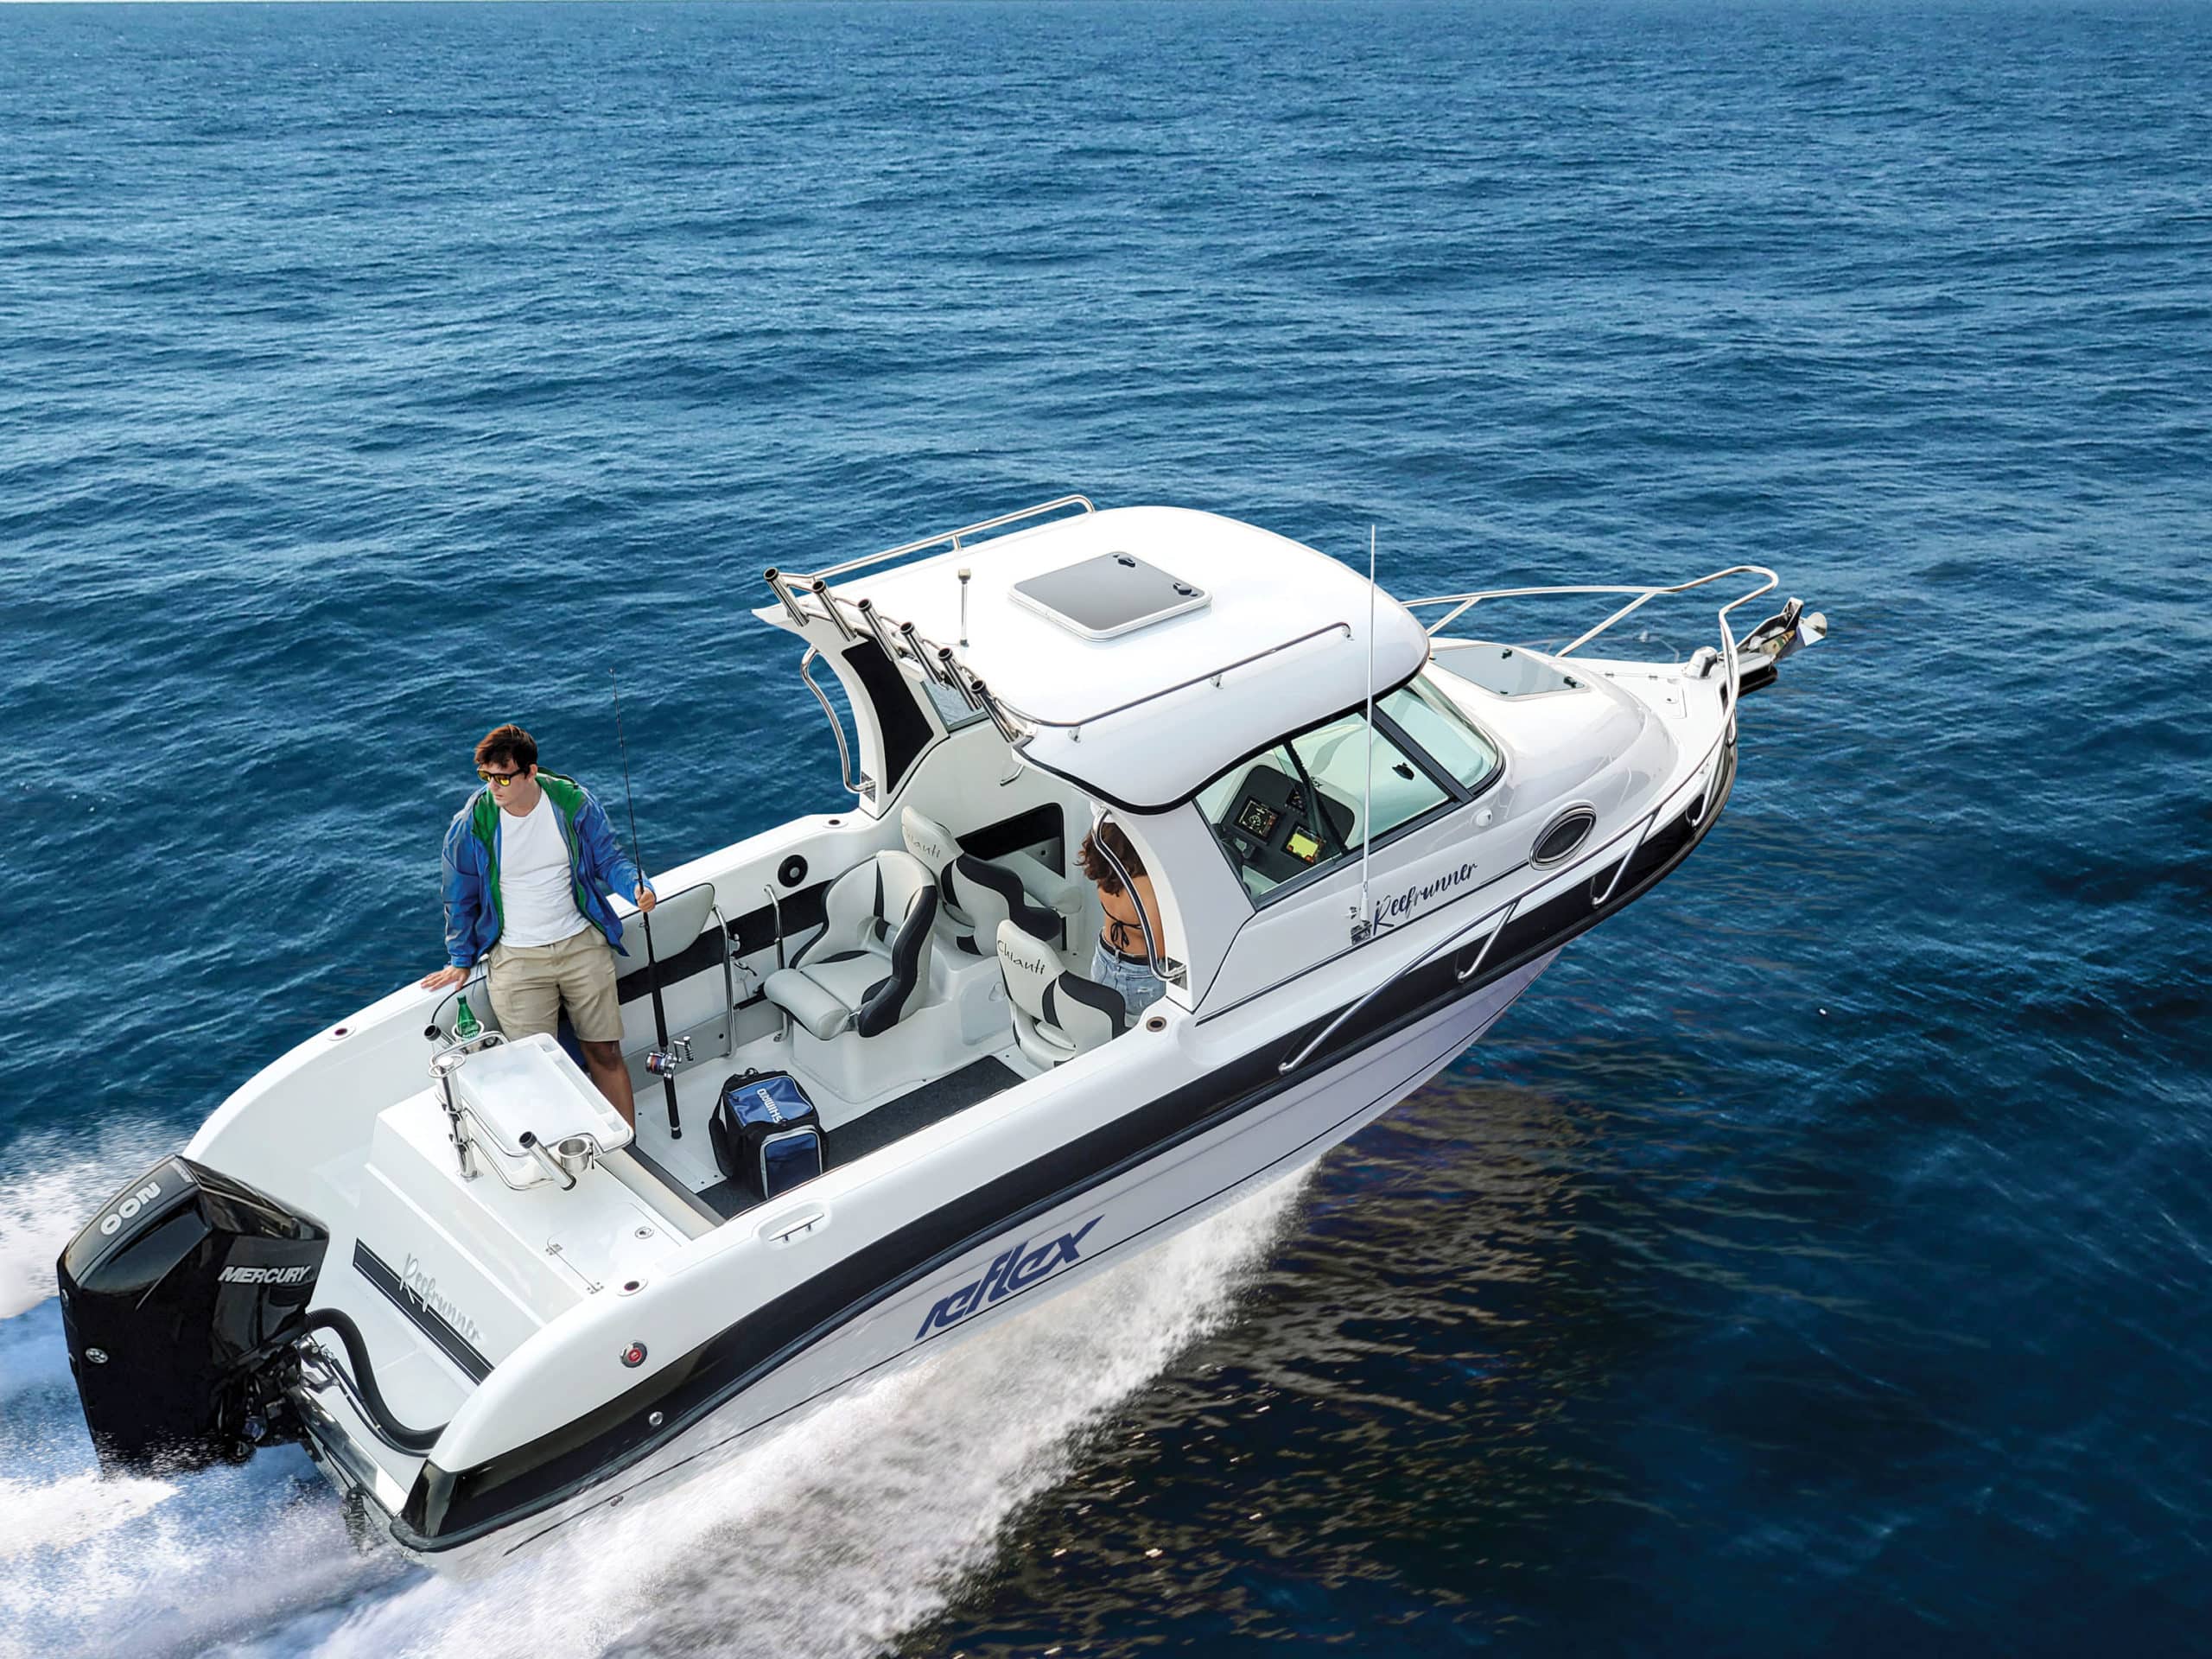 2021 Reflex Reefrunner Boat Test, Pricing, Specs